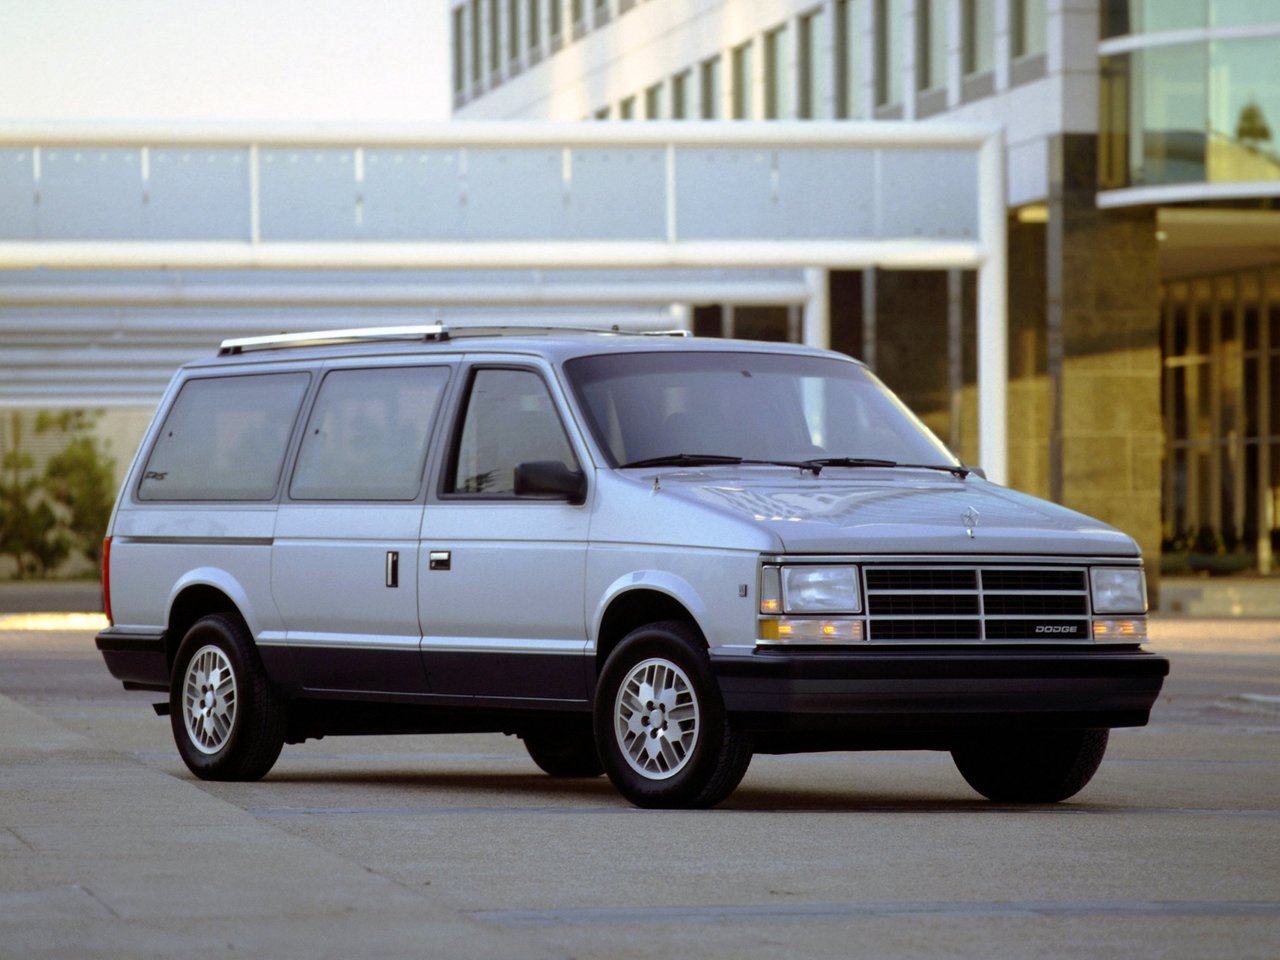 Караван бел. Dodge Caravan 1984. Dodge Caravan 1984-1990. Dodge Caravan 1990. Dodge Caravan 1.